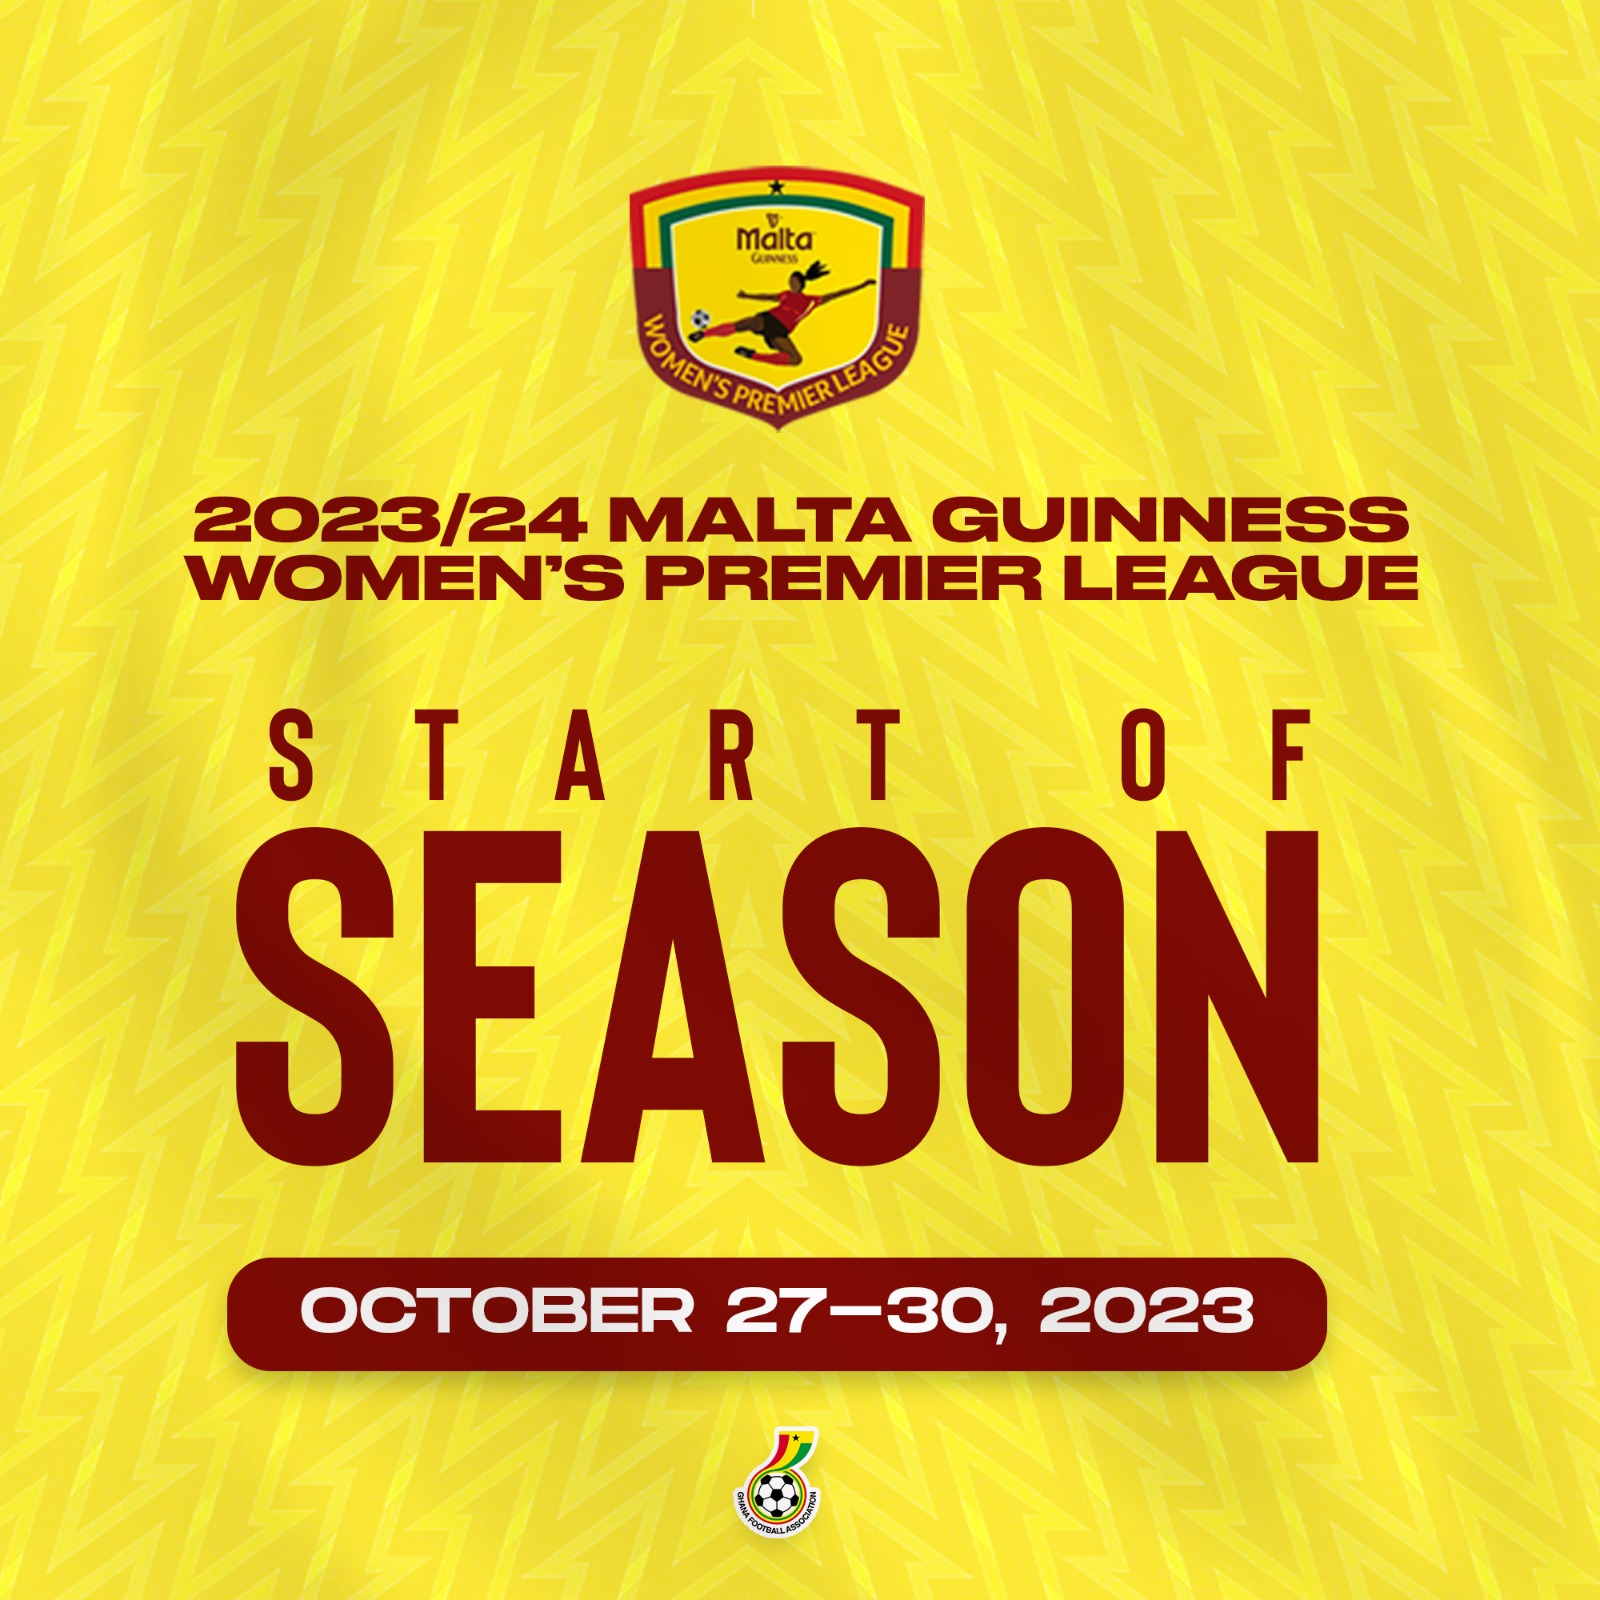 Malta Guinness Women’s Premier League kicks off Friday October 27